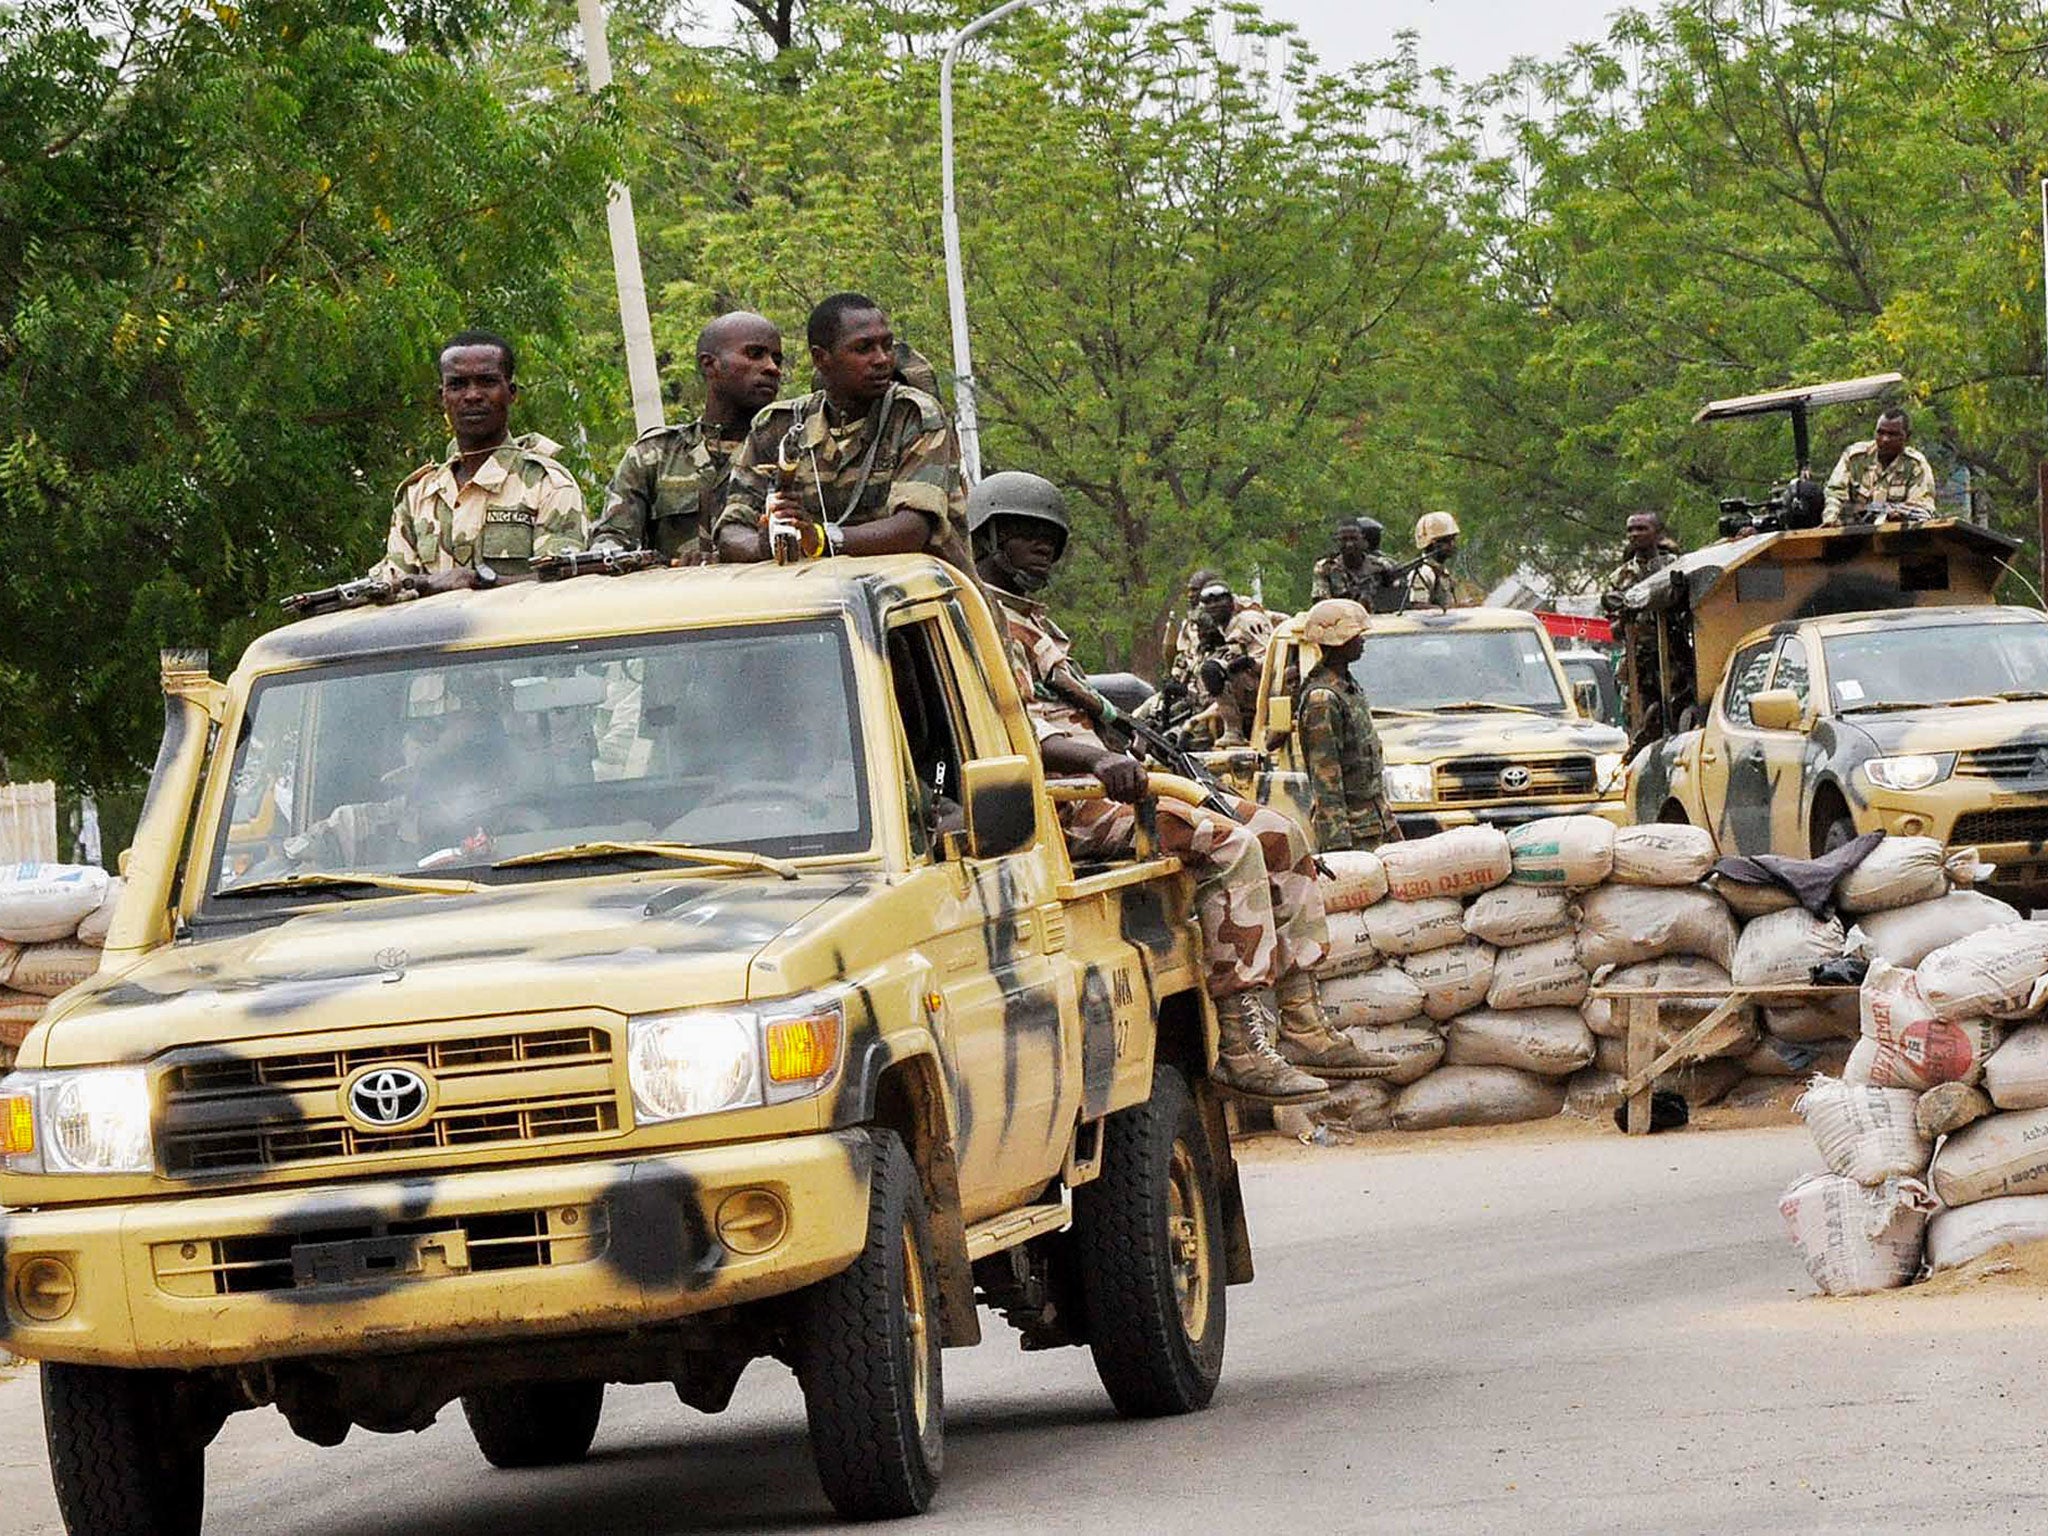 Members of the Nigerian military patrolling in Maiduguri, North East Nigeria, close to the scene of attacks by Boko Haram